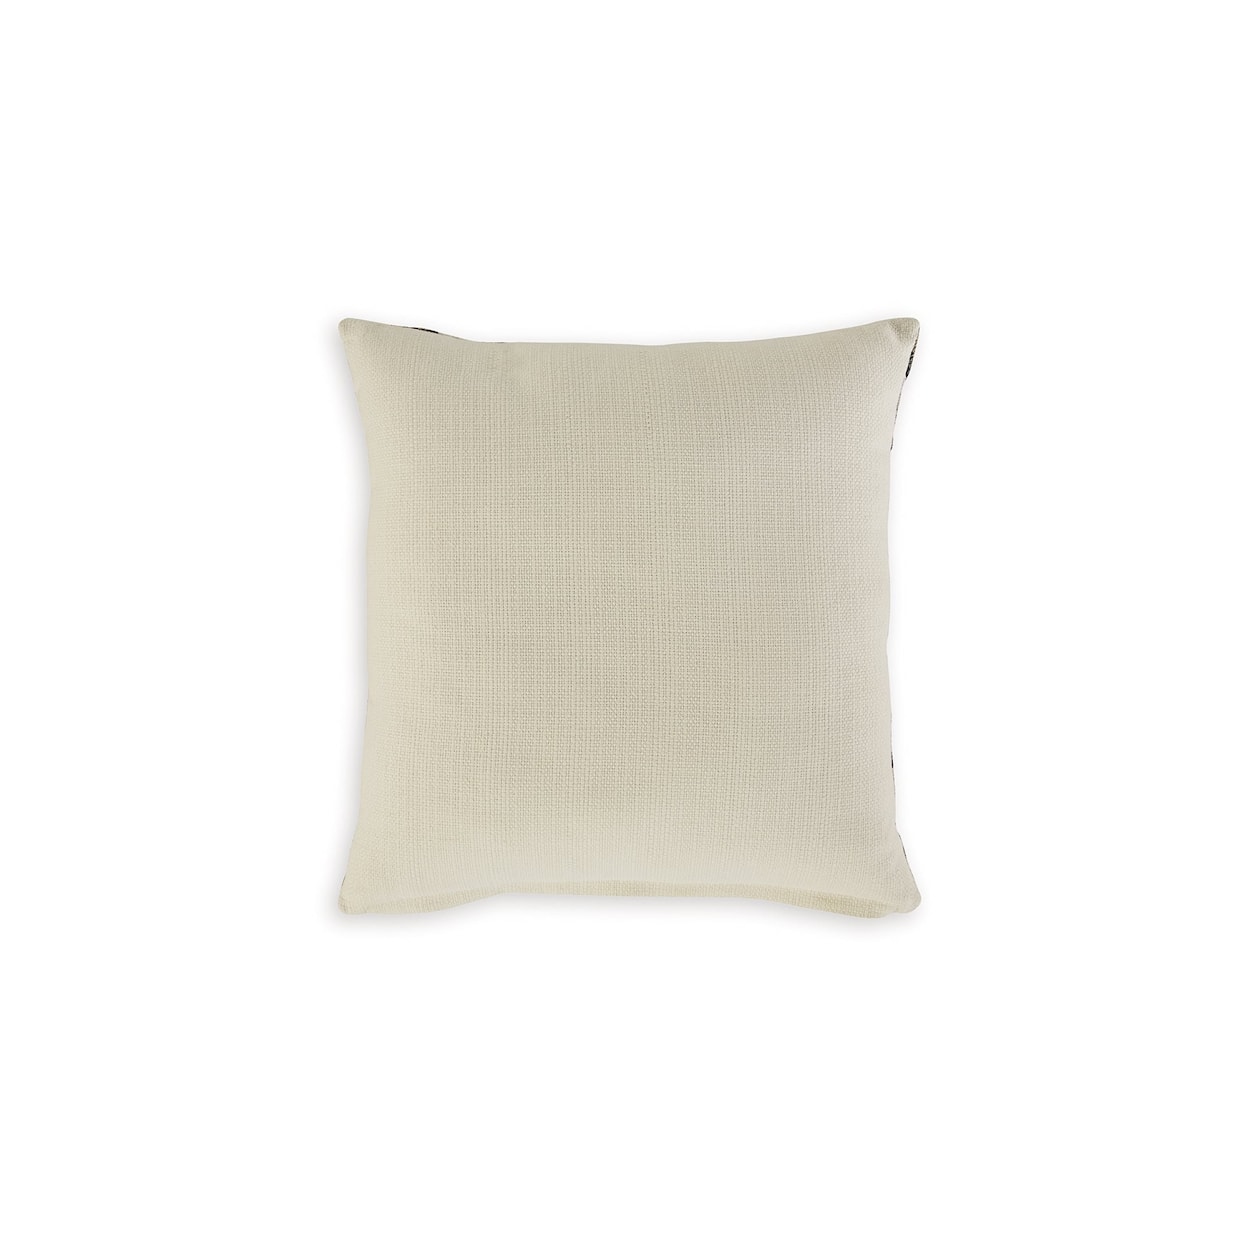 Ashley Furniture Signature Design Holdenway Pillow